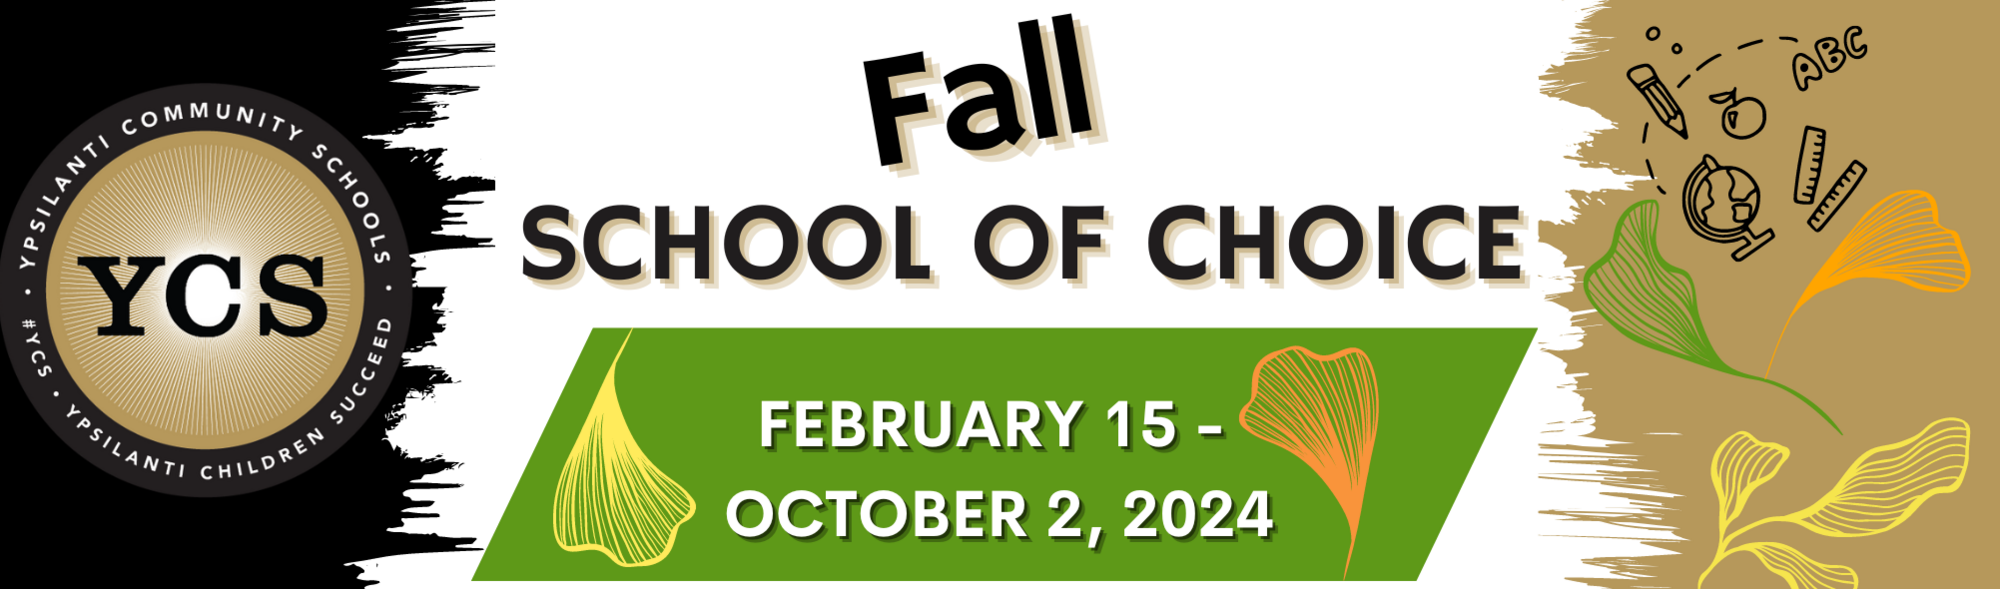 School of Choice Winter/Spring Registration Dates  October 5, 2023 - February 14, 2023